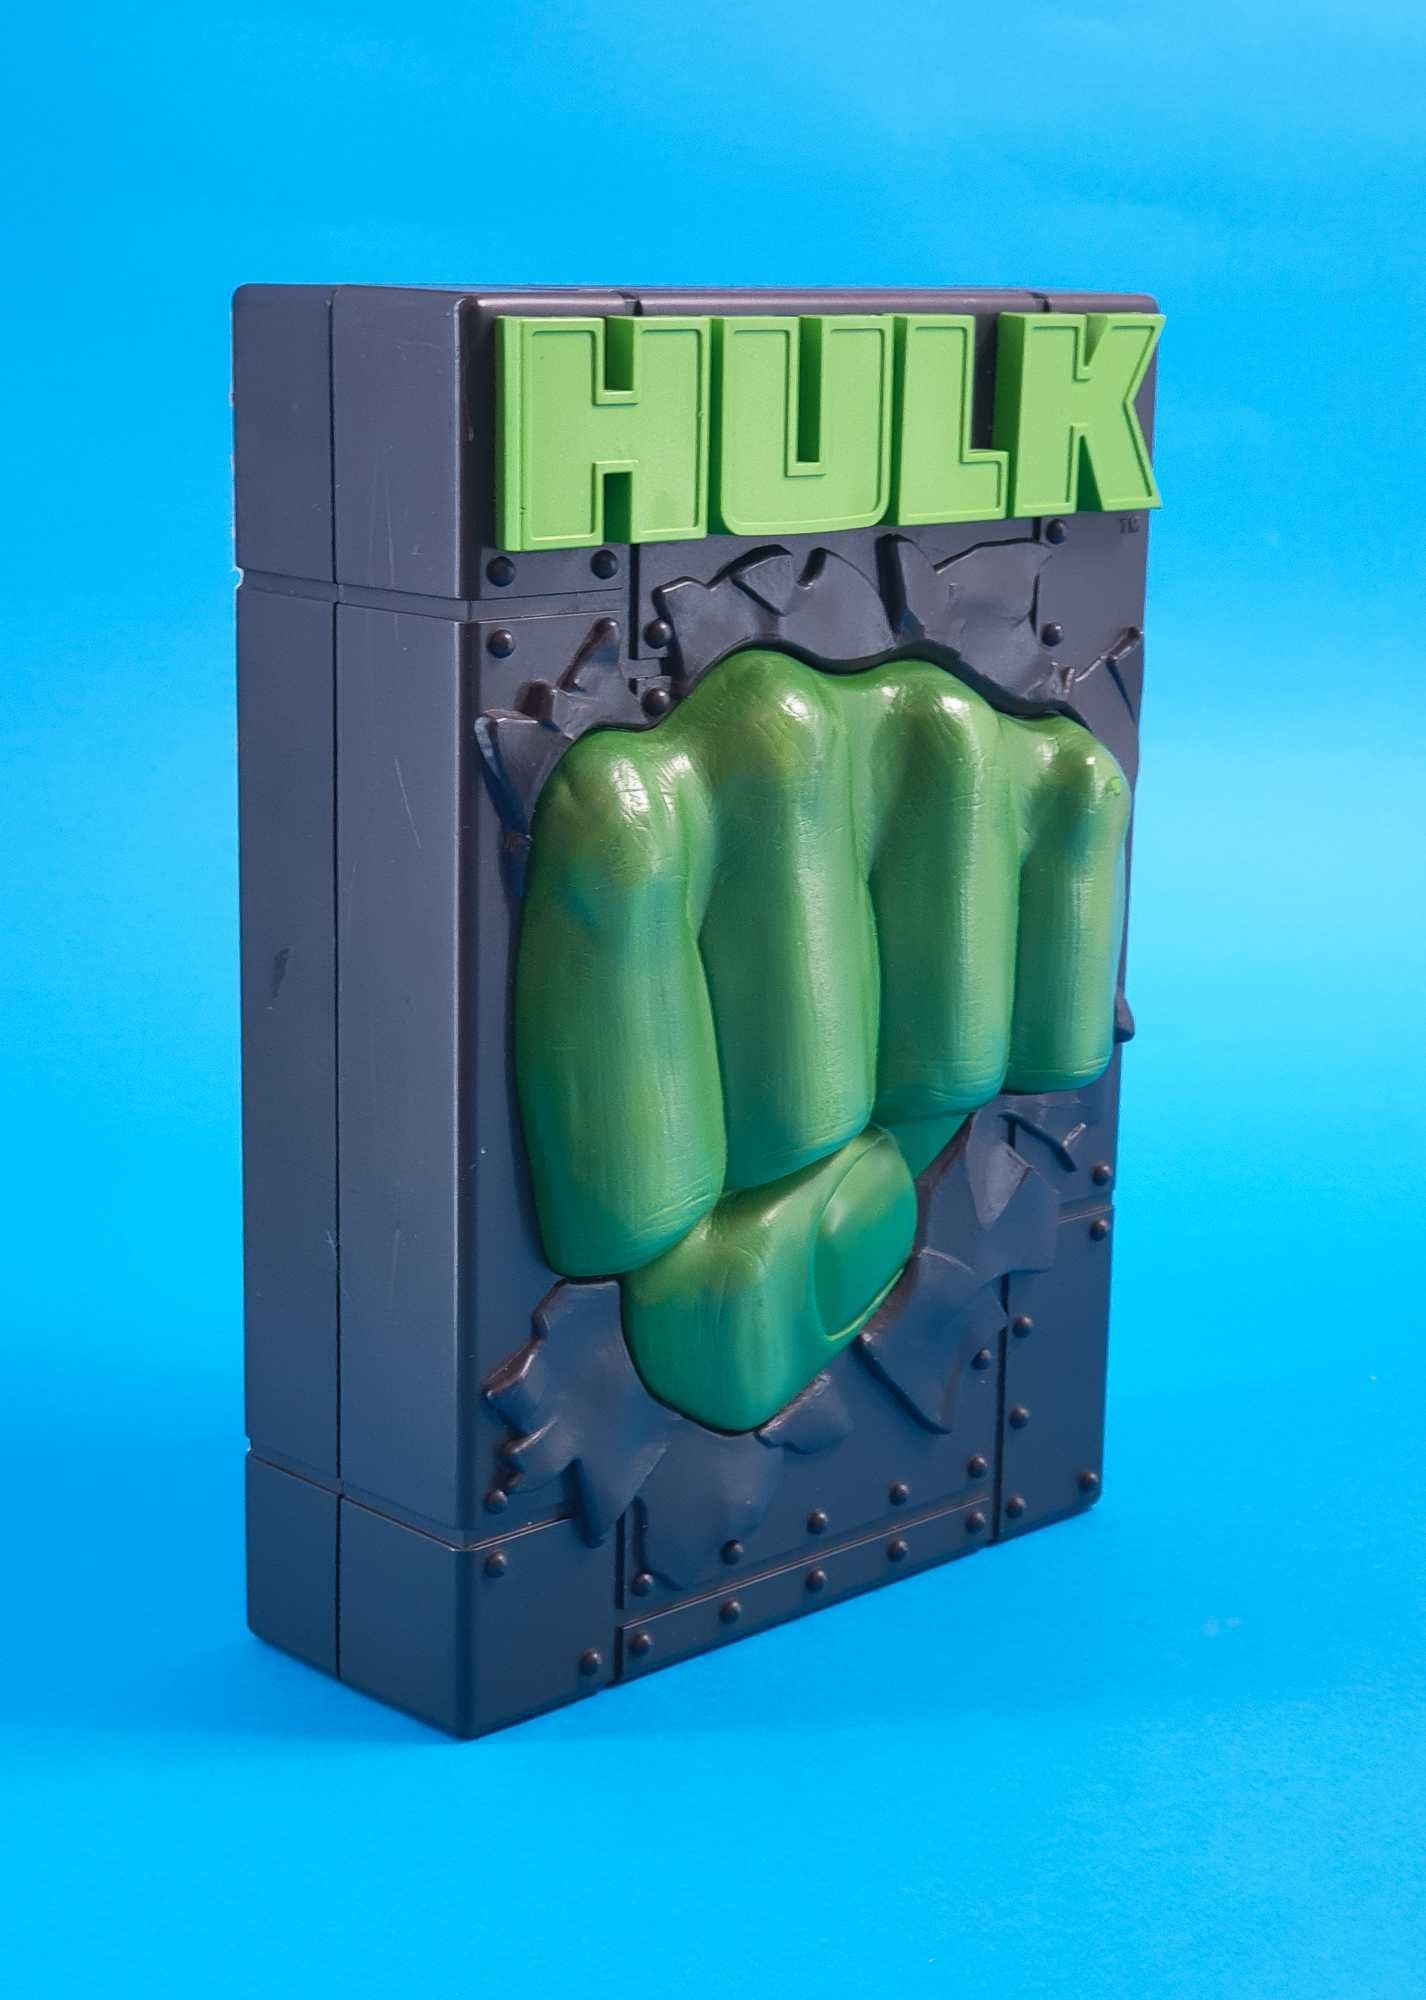 Hulk 2003 DVD limited edition box set #marvel